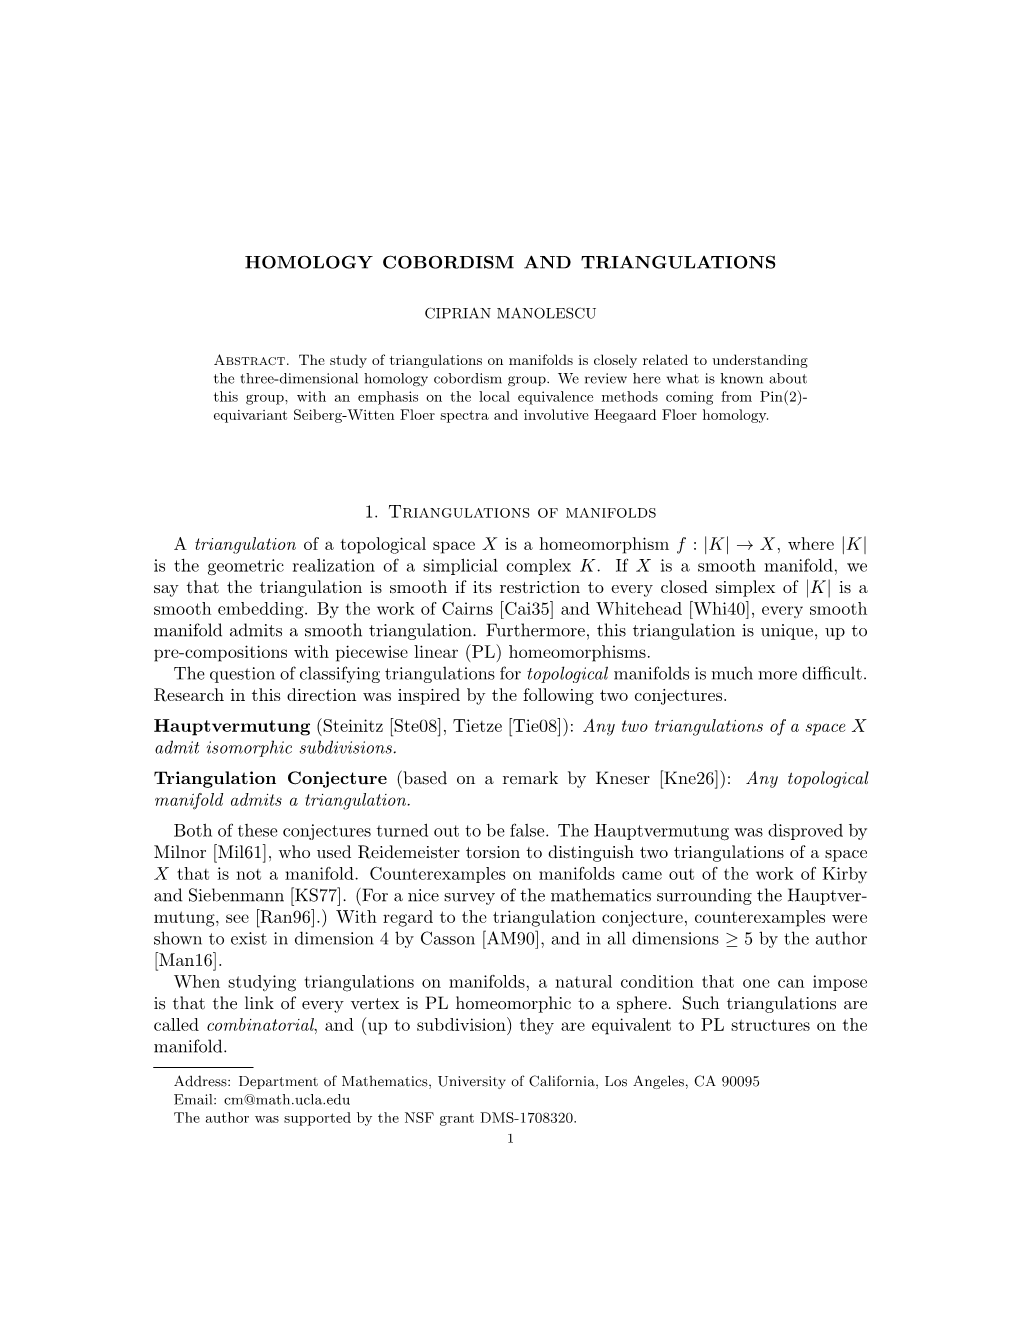 Homology Cobordism and Triangulations